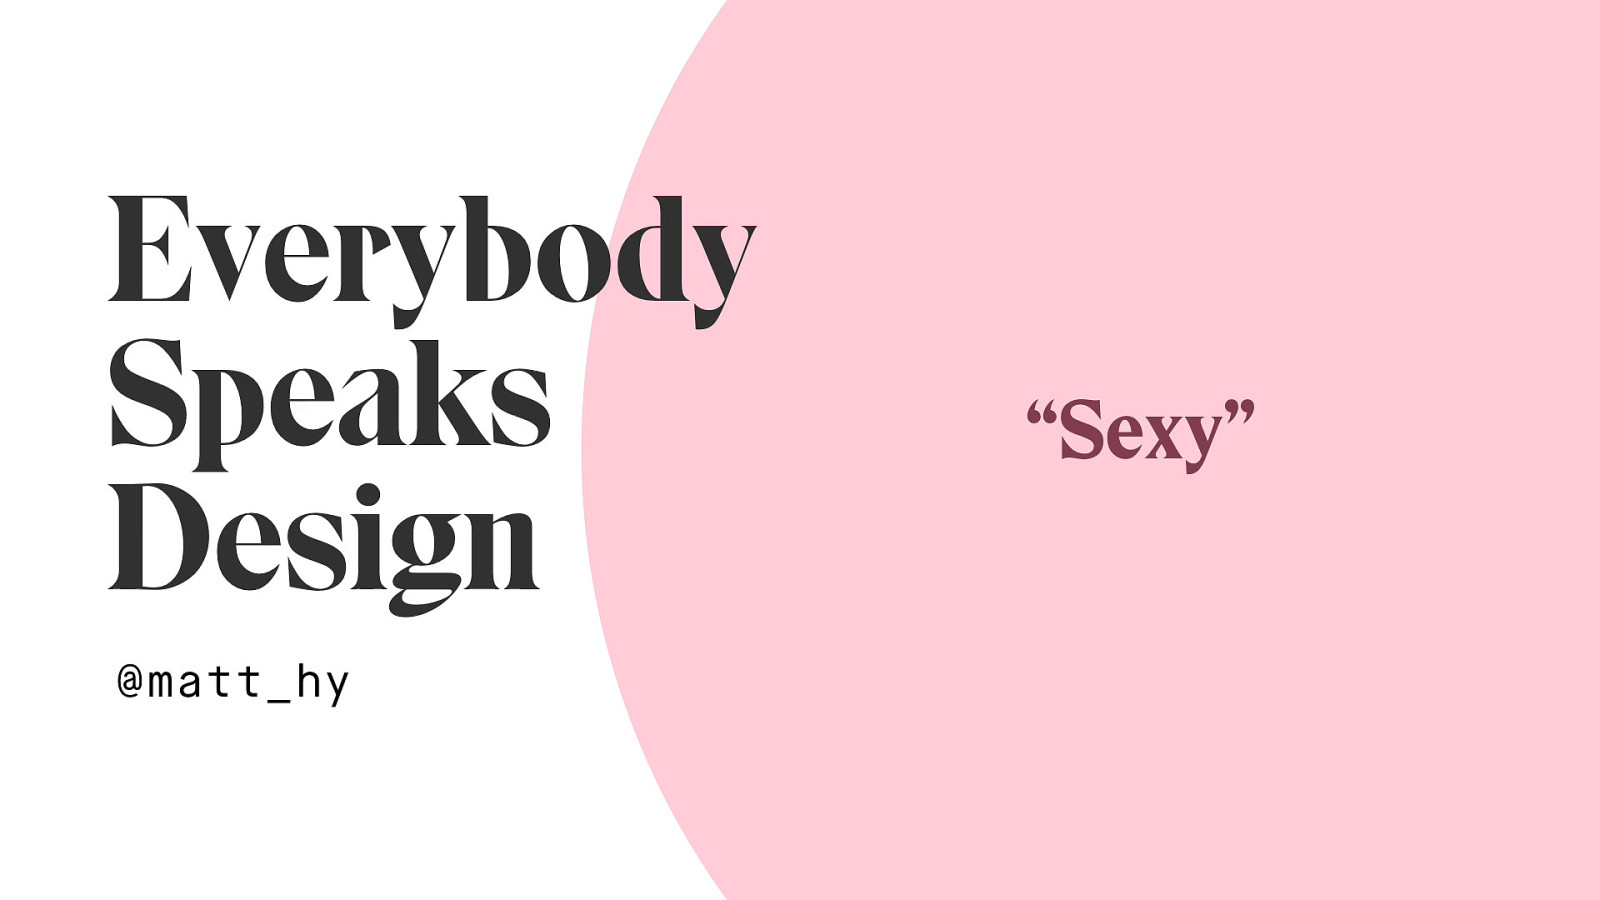 Everybody Speaks Design